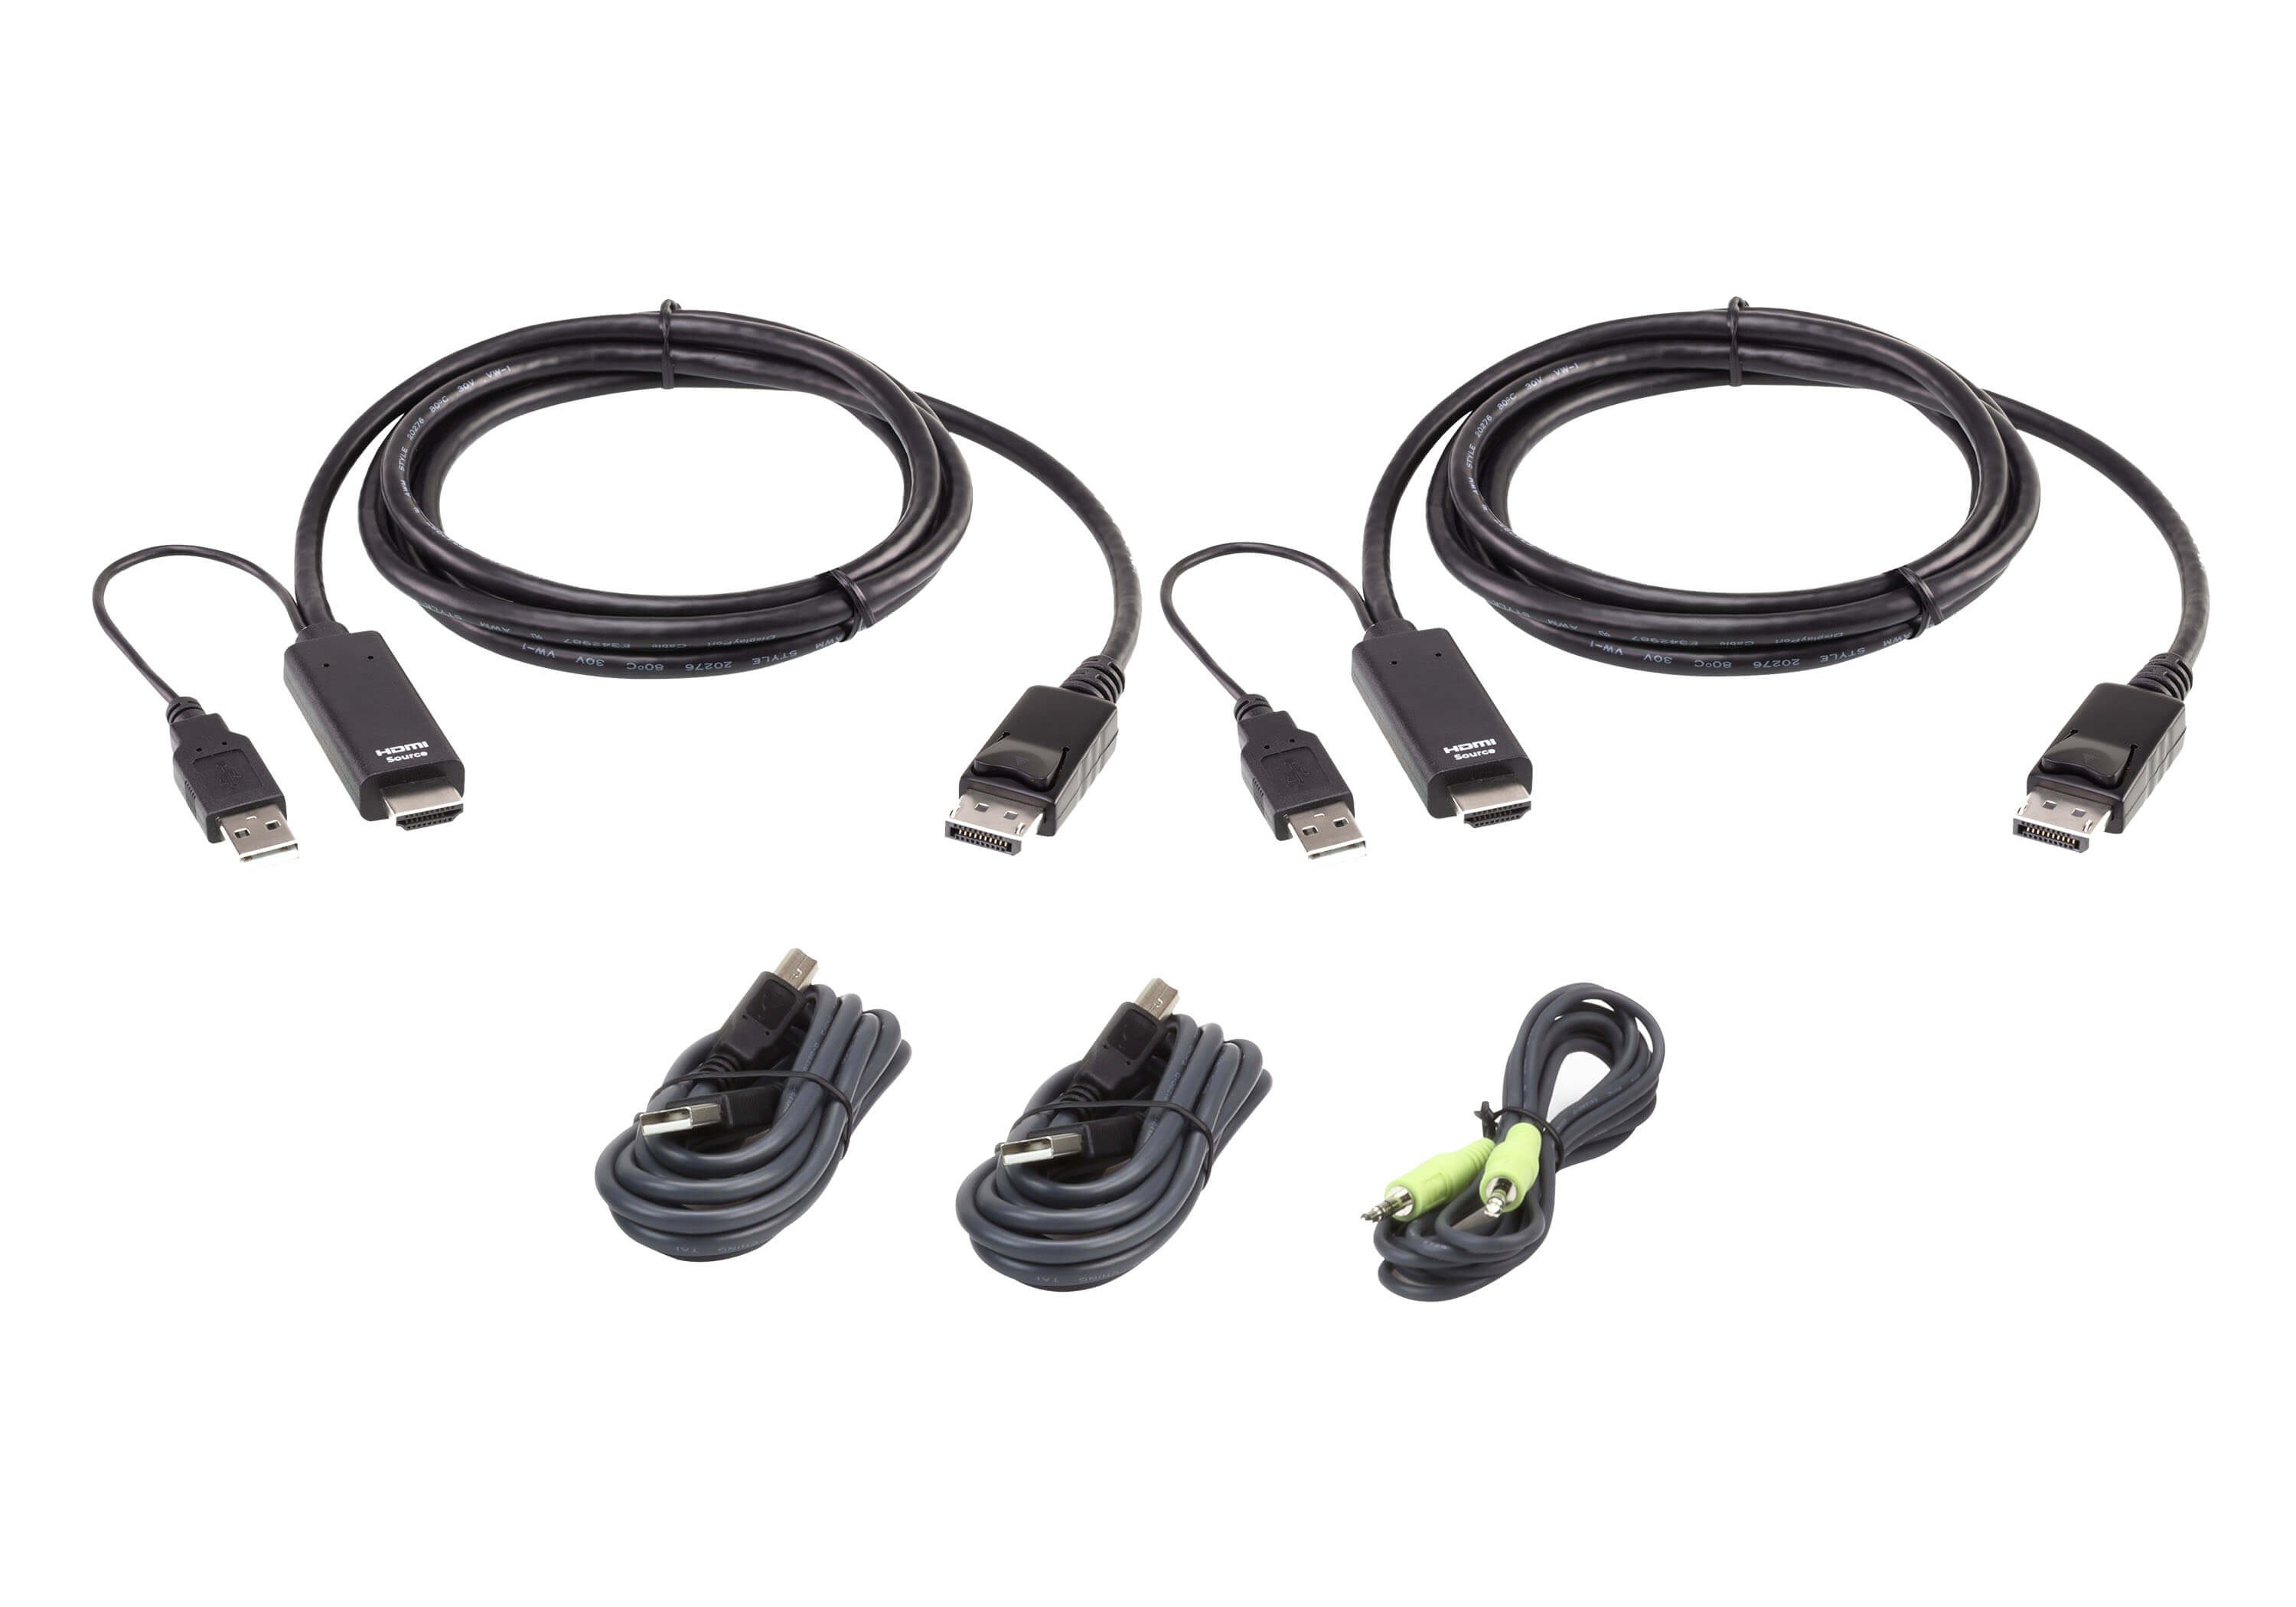 2L-7D02UHDPX5  Kit de cable para conexión KVM seguro universal dual display de 1,8 m